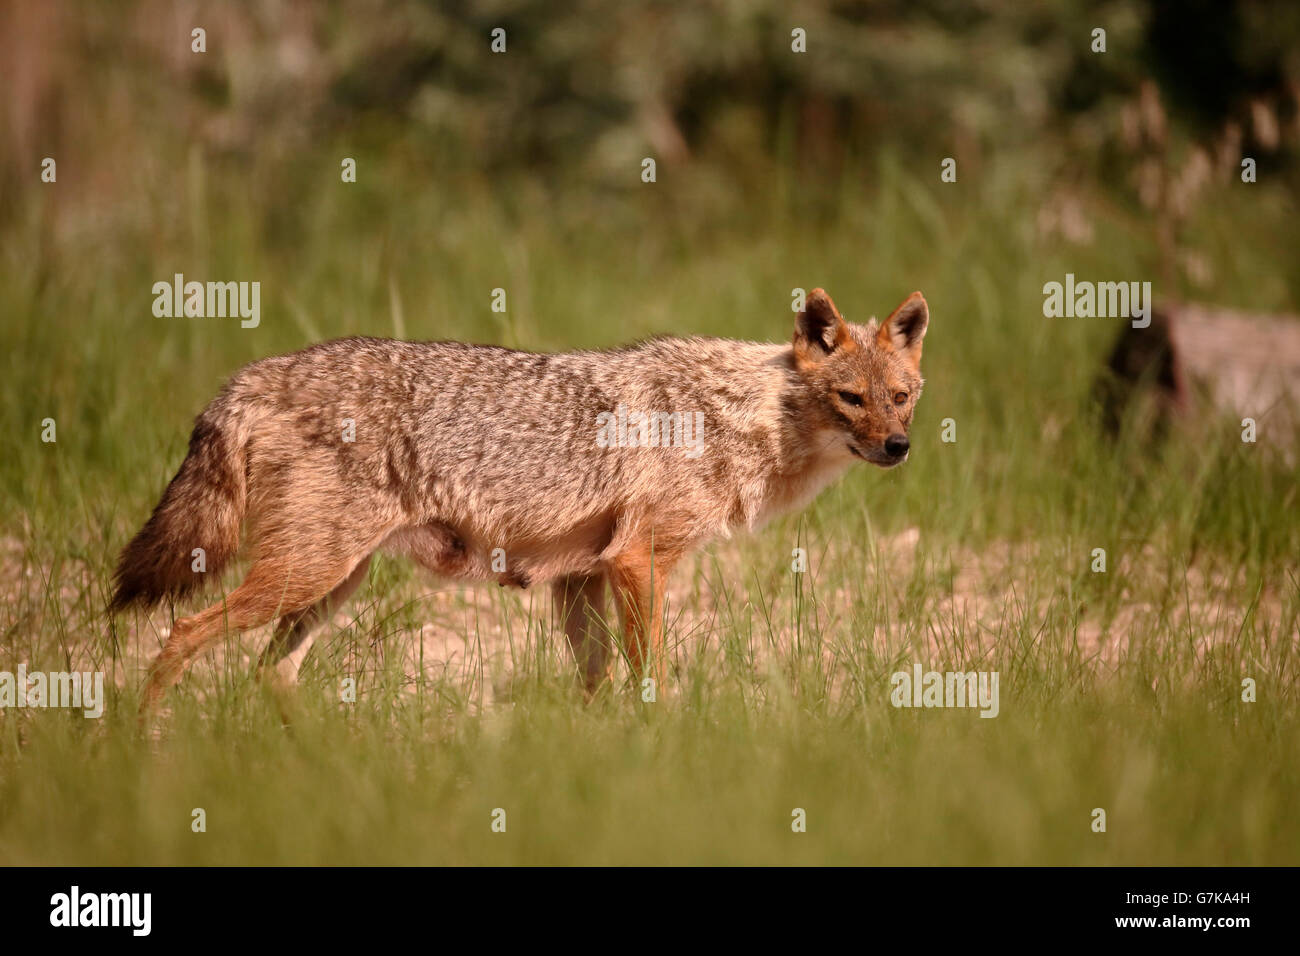 Europäische Schakal, Canis Aureus Moreoticus, einziges Säugetier auf Rasen, Rumänien, Juni 2016 Stockfoto